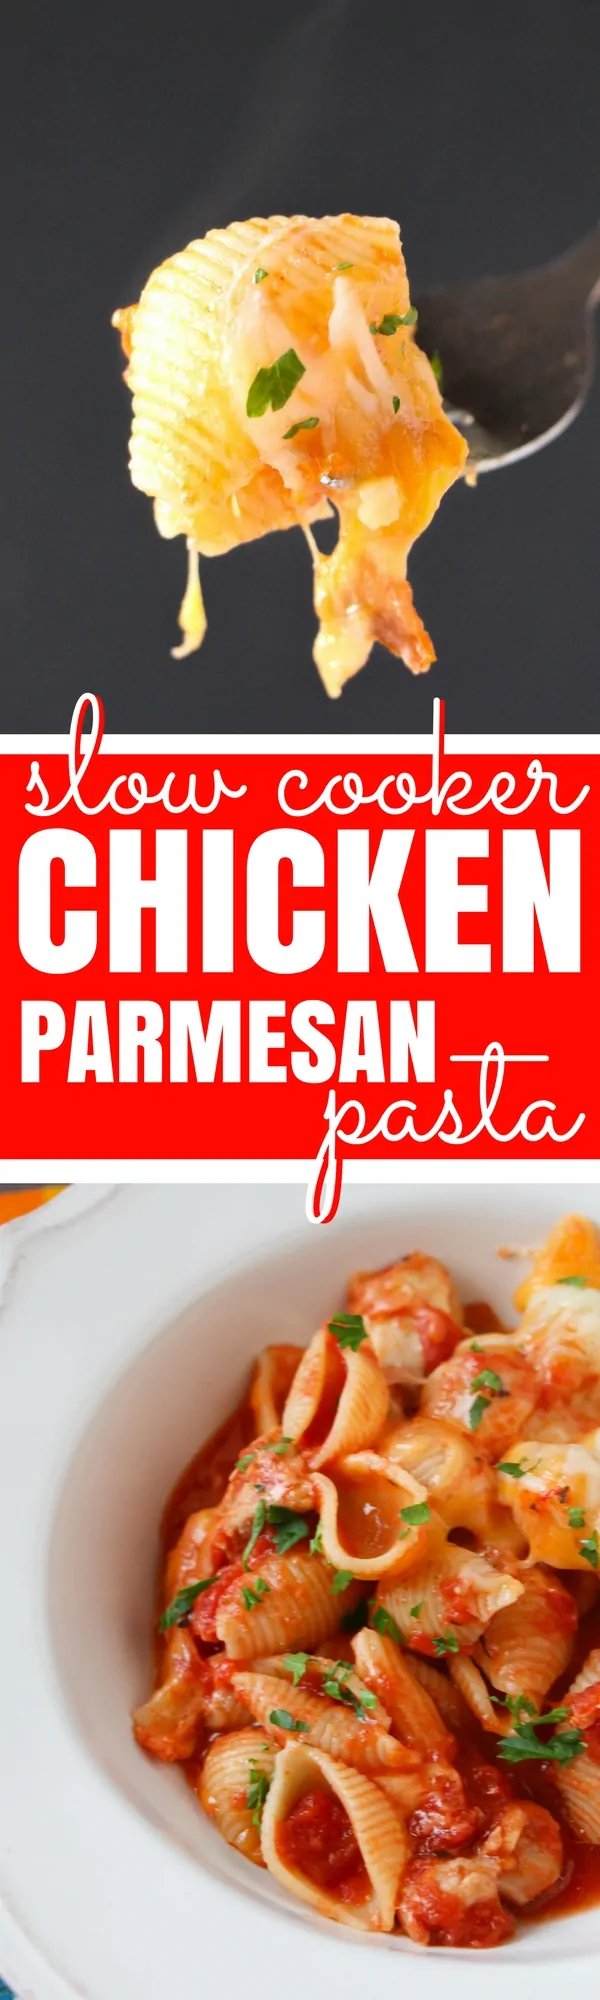 Slow Cooker Chicken Parmesan Pasta